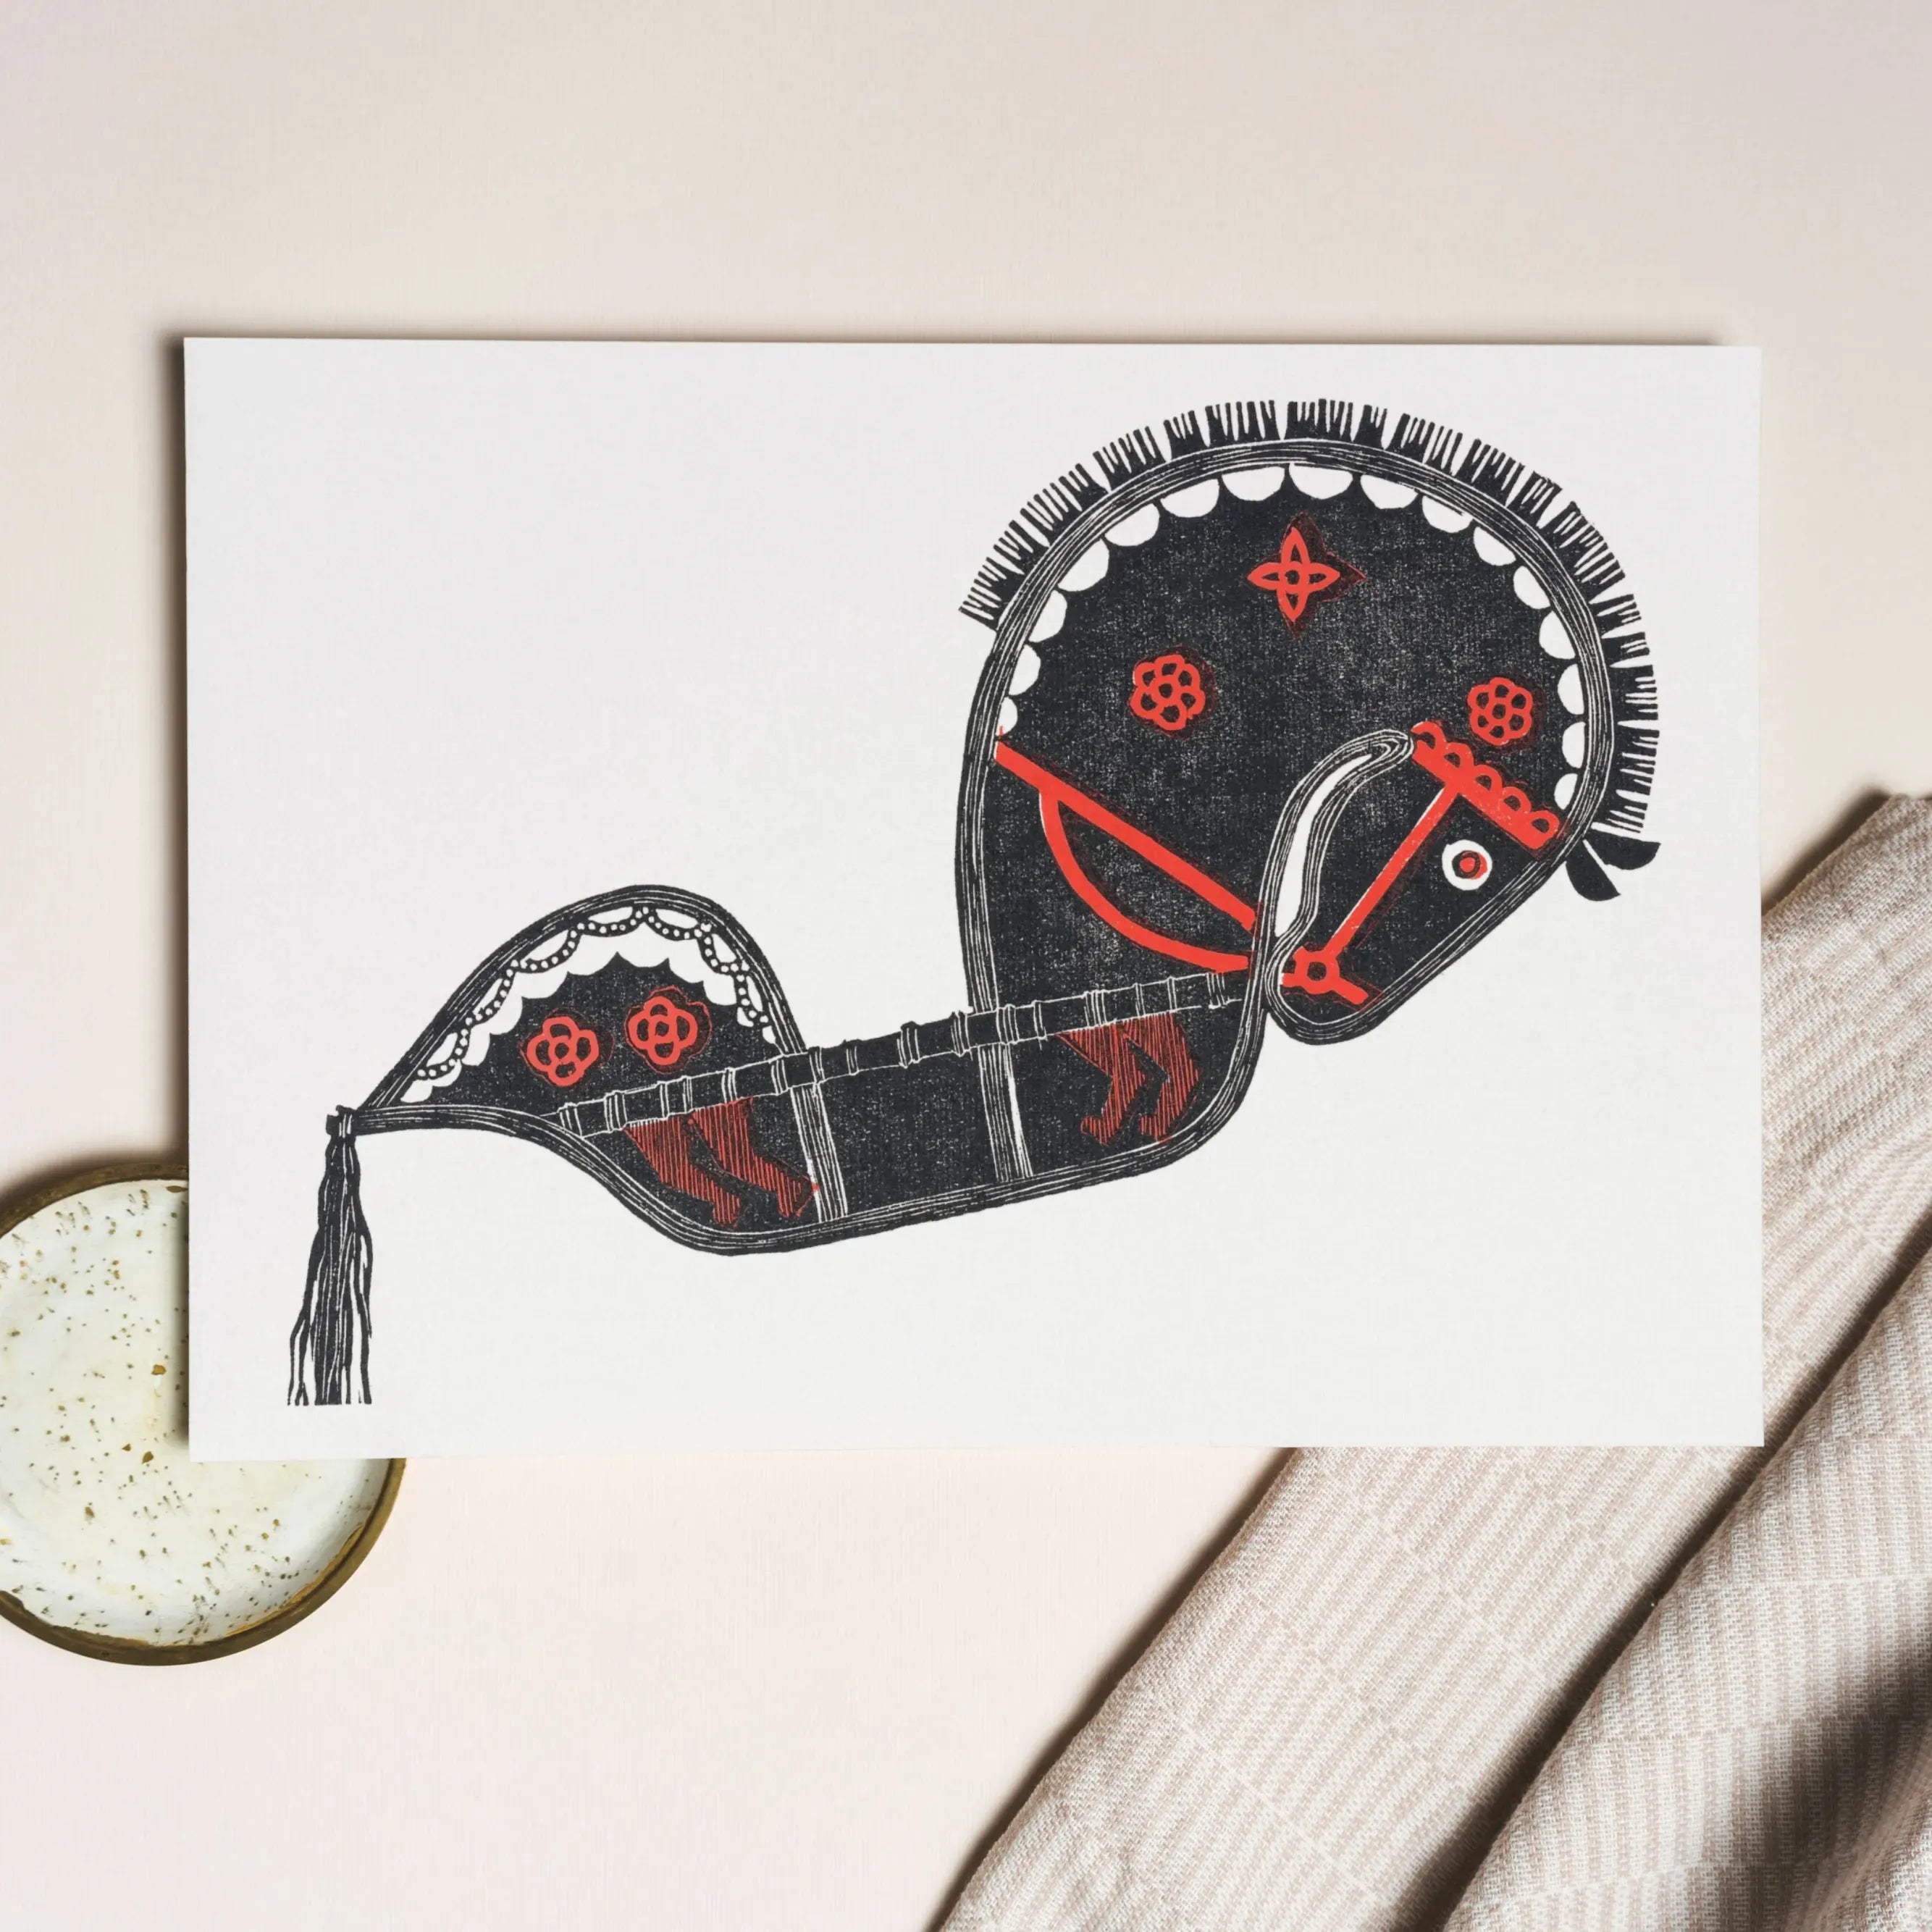 Ceremonieel Danspaard - Reijer Stolk Horse Art Greeting Card - A5 Landscape / 1 Card - Greeting & Note Cards